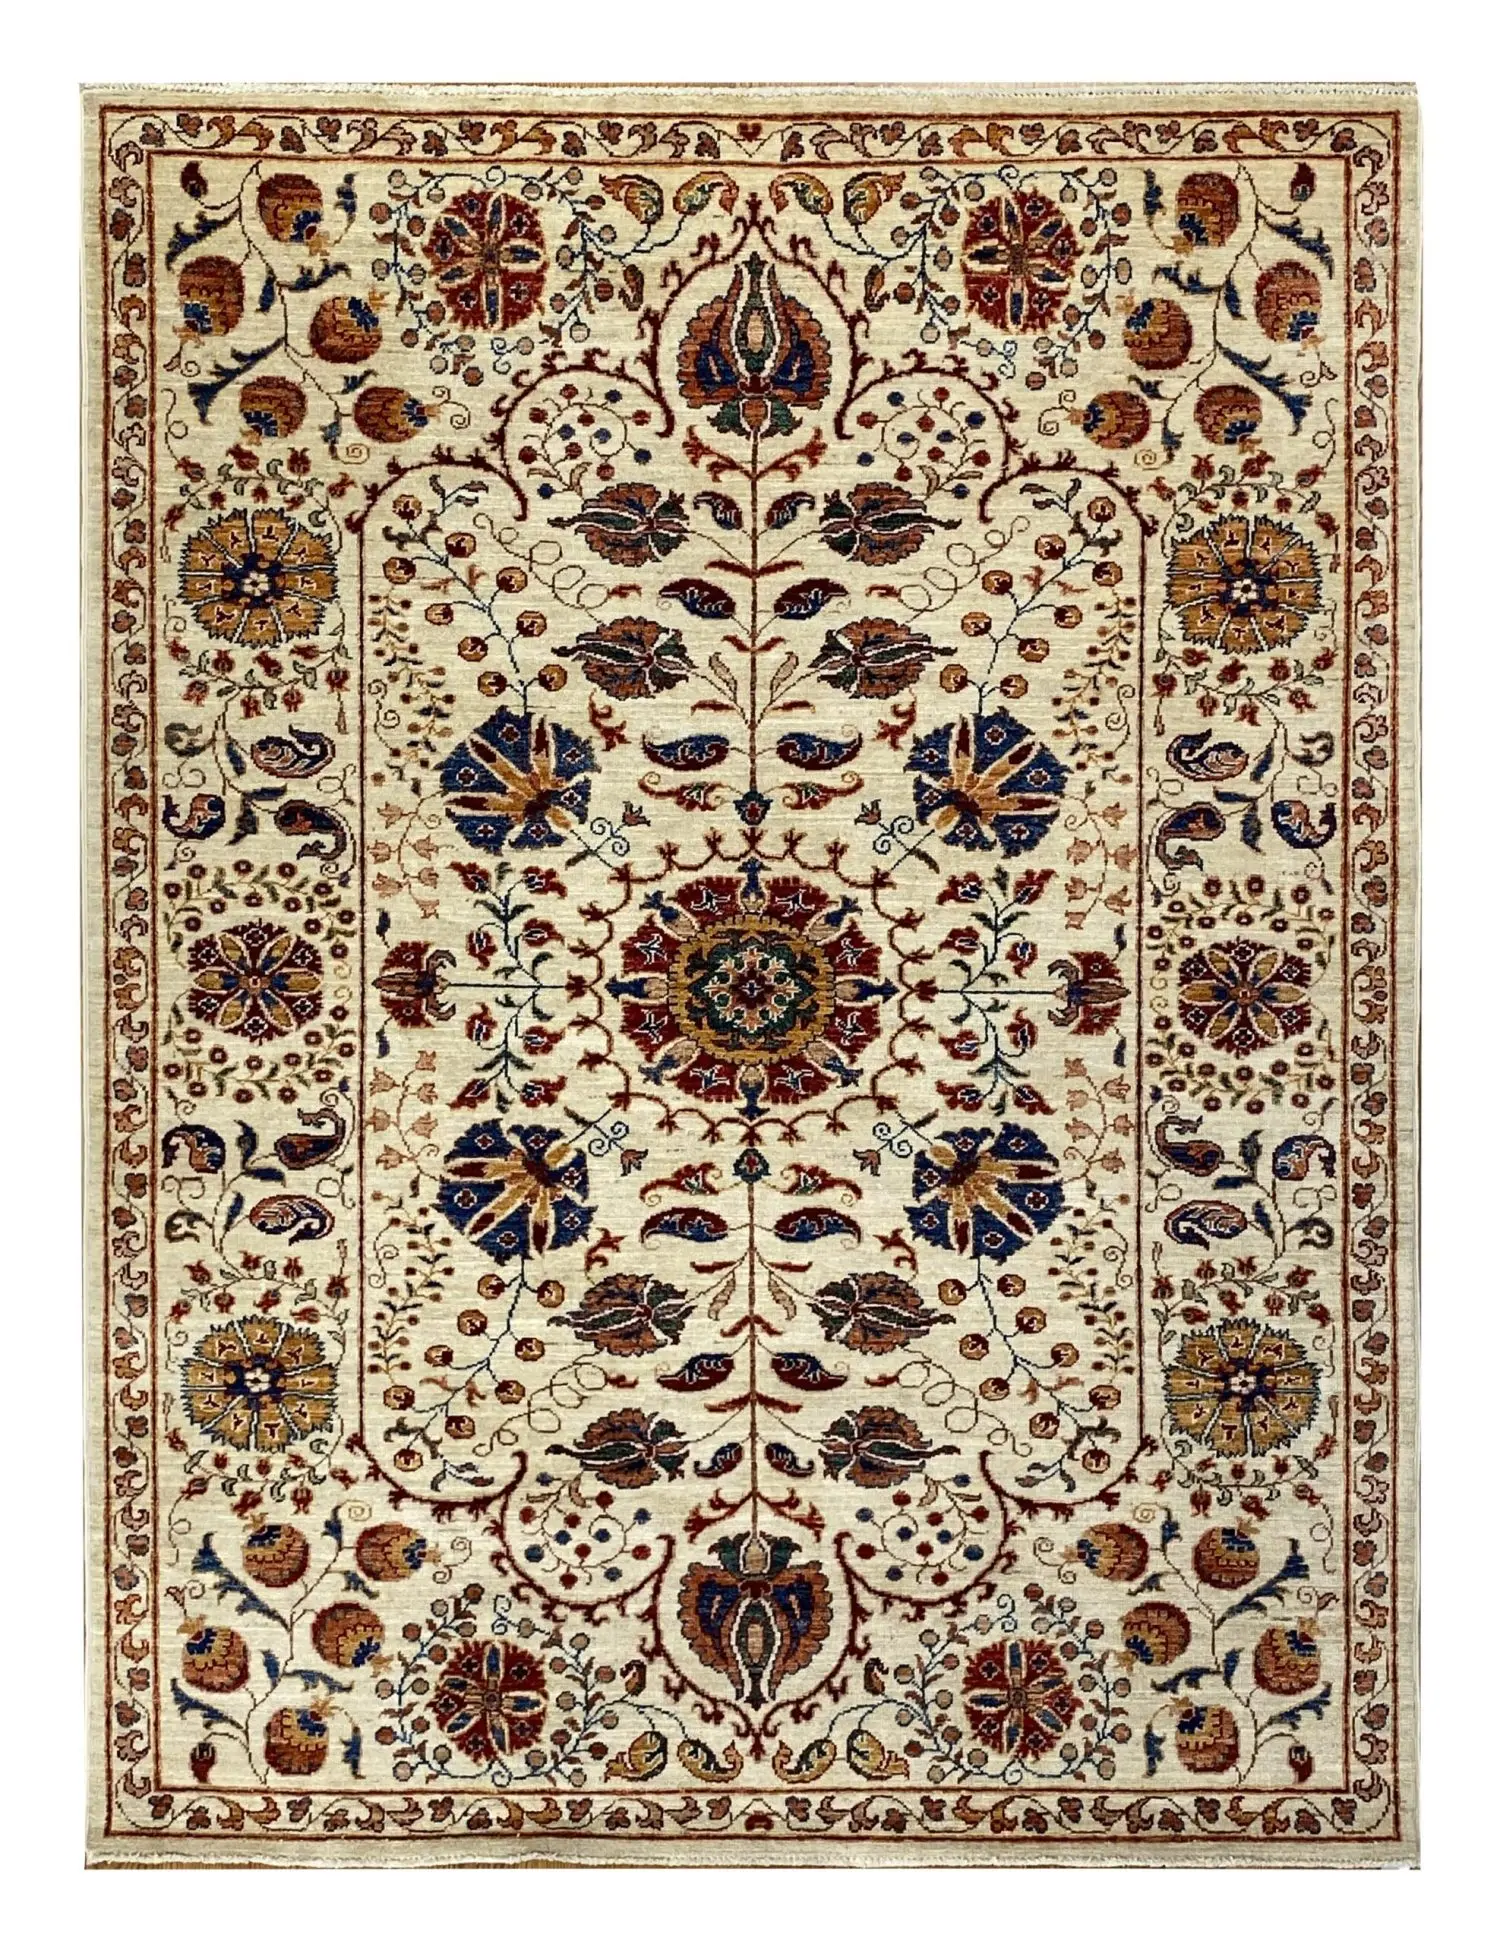 Suzani 5' x 6' 7" Handmade Area Rug - Shabahang Royal Carpet